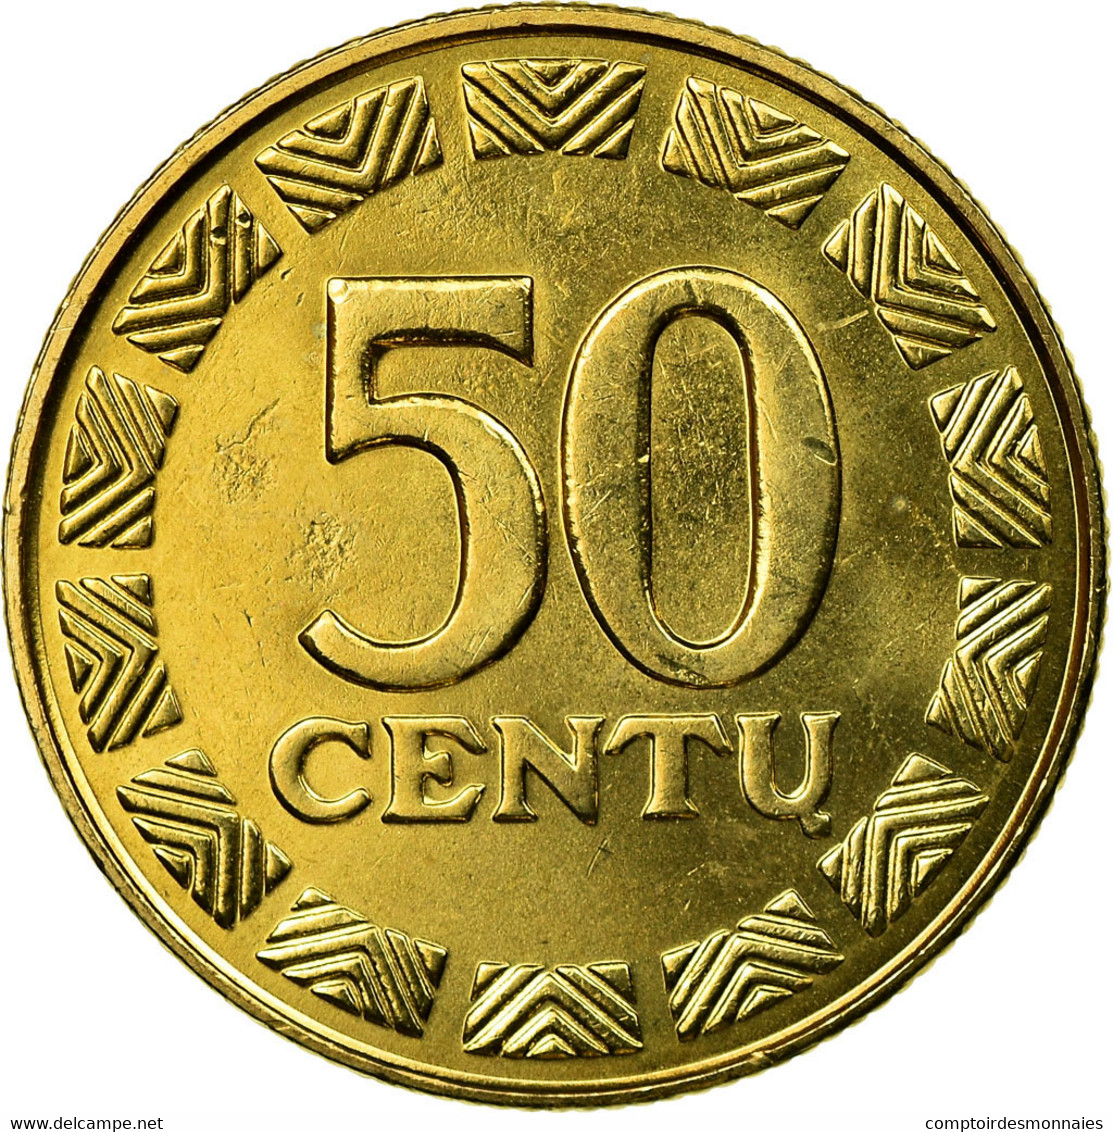 Monnaie, Lithuania, 50 Centu, 2000, SUP, Nickel-brass, KM:108 - Litauen